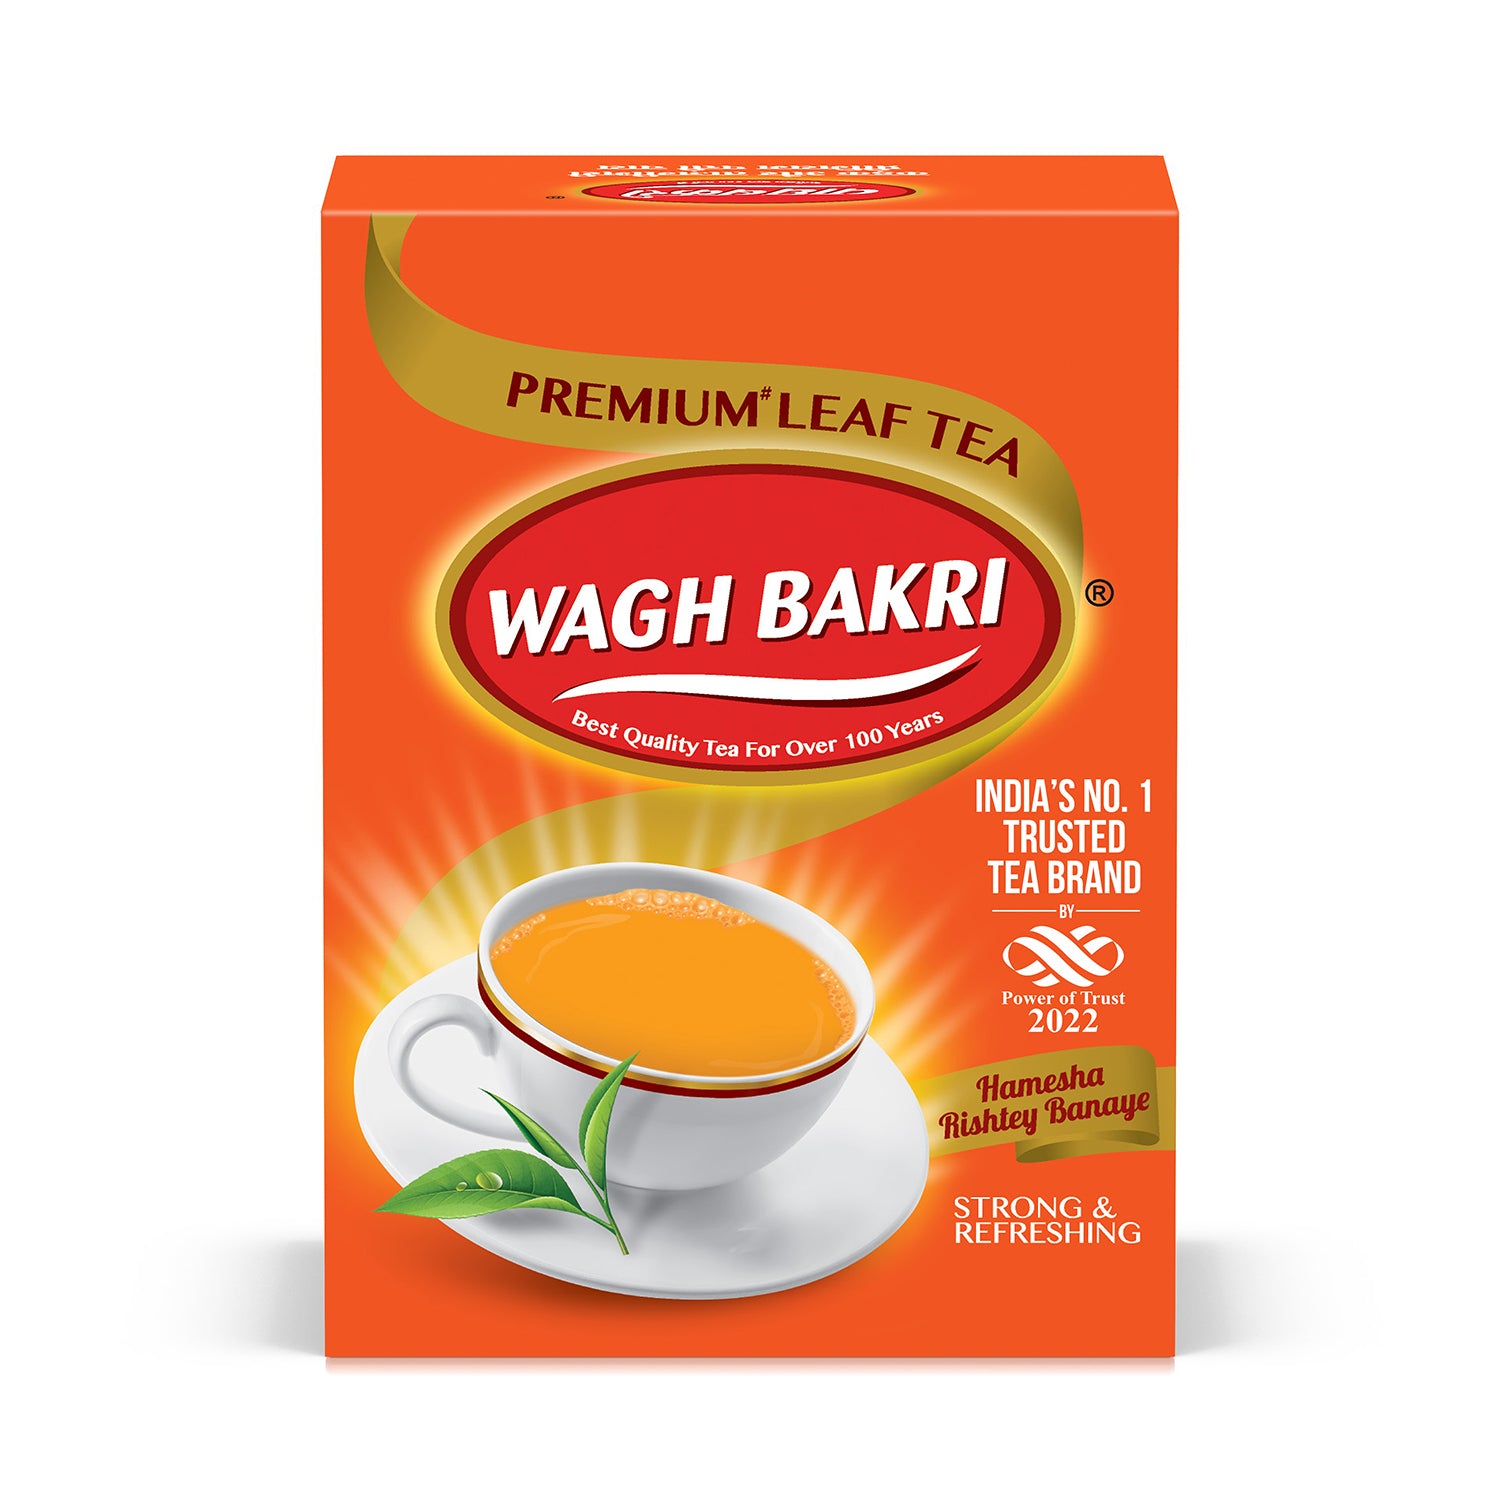 Wagh Bakri Premium Leaf Pack of 2 & Good Morning International Tea Combo